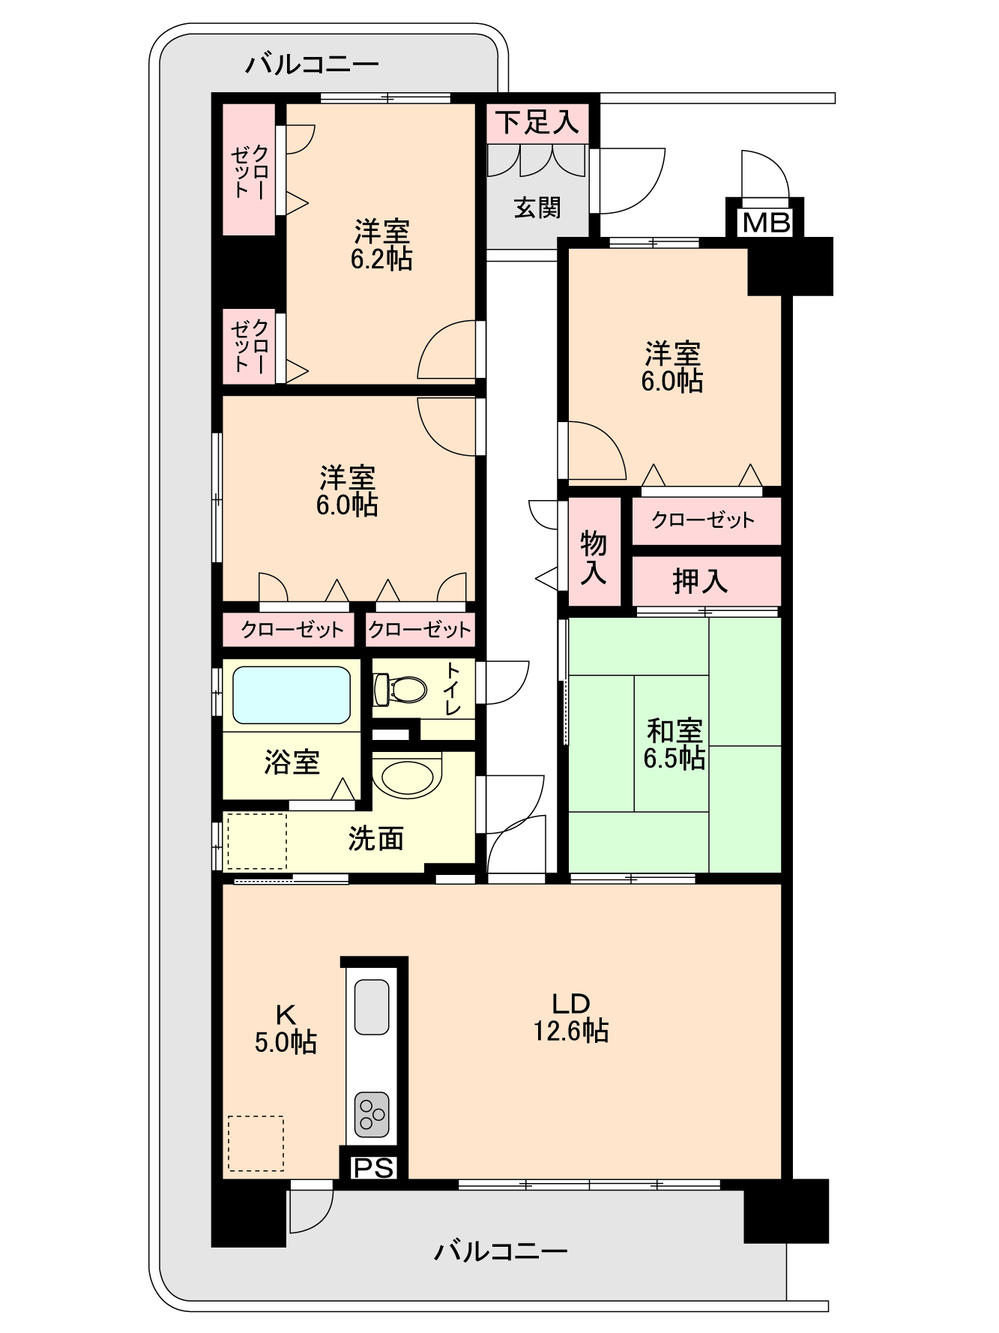 Floor plan. 4LDK, Price 21 million yen, Footprint 100.33 sq m , Balcony area 30.86 sq m